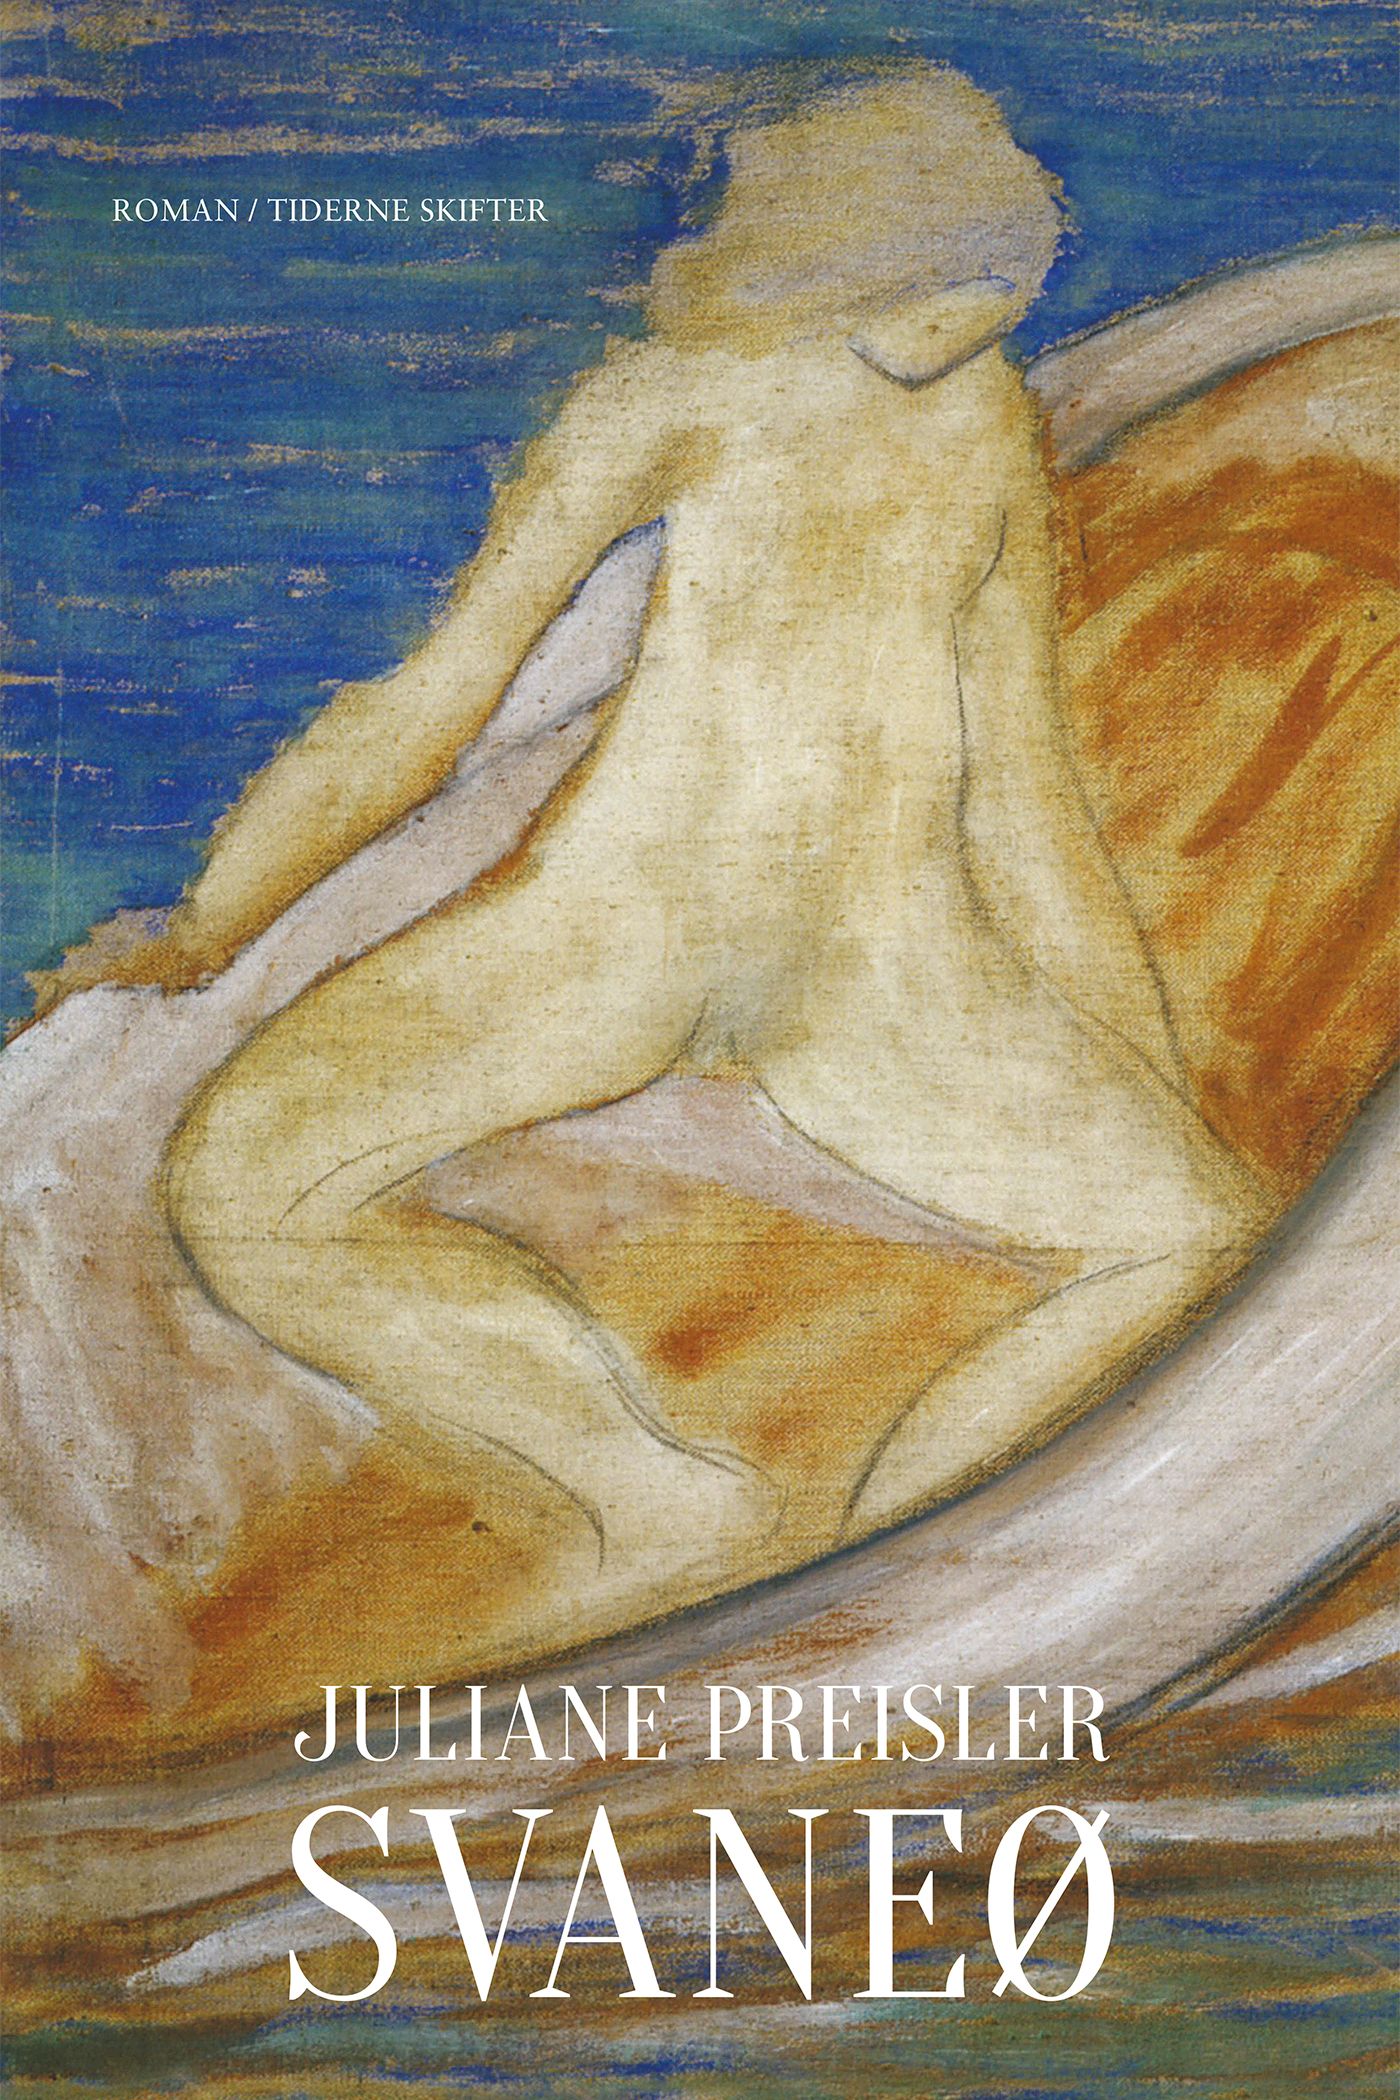 Svaneø, eBook by Juliane Preisler